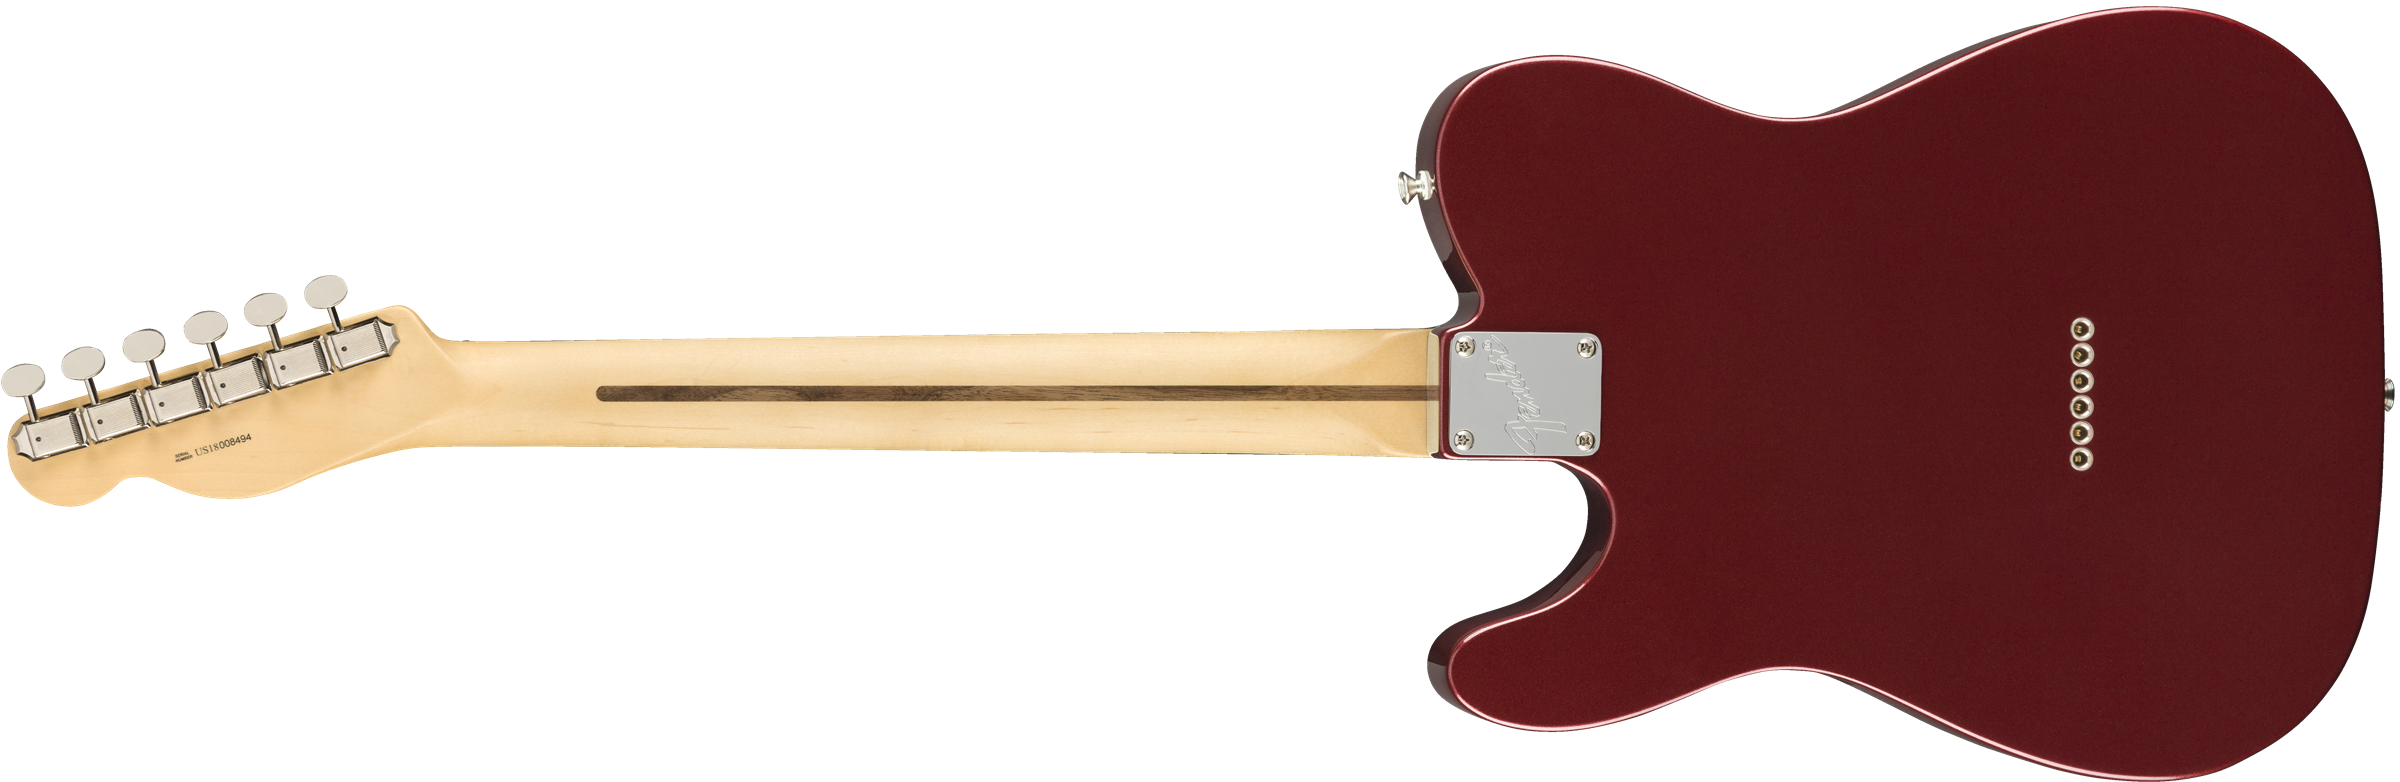 Fender American Performer Telecaster with Humbucking Pickup Rosewood Fingerboard - Aubergine 0115120345